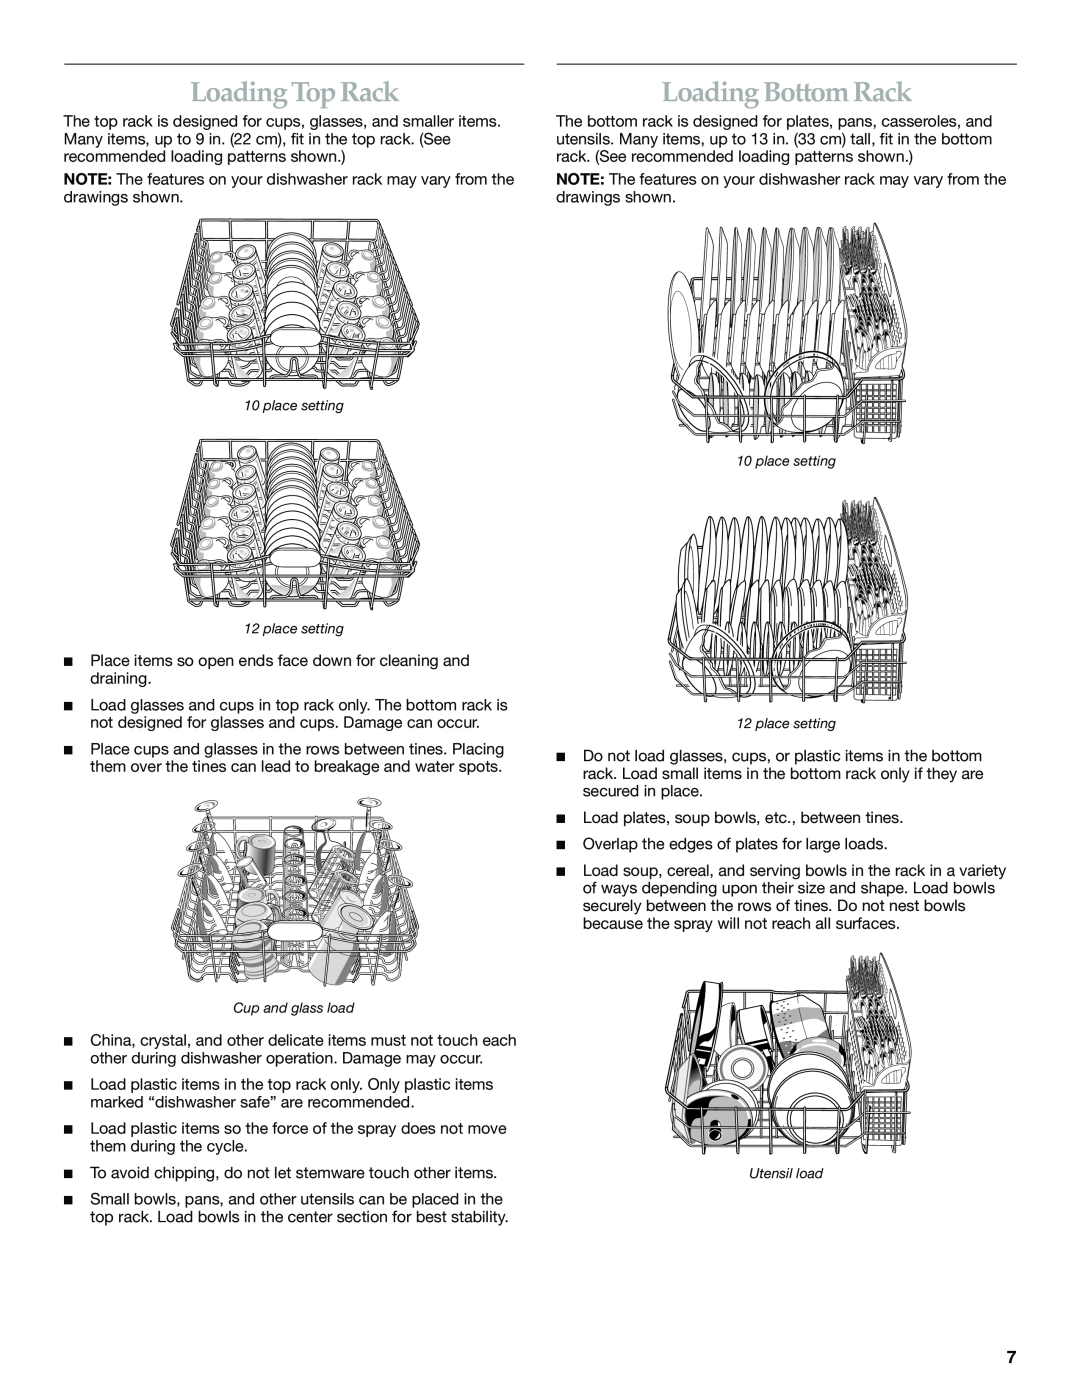 KitchenAid 119, KUDK01IL, KUDI01IL, Dishwasher manual Loading Top Rack, Loading Bottom Rack 